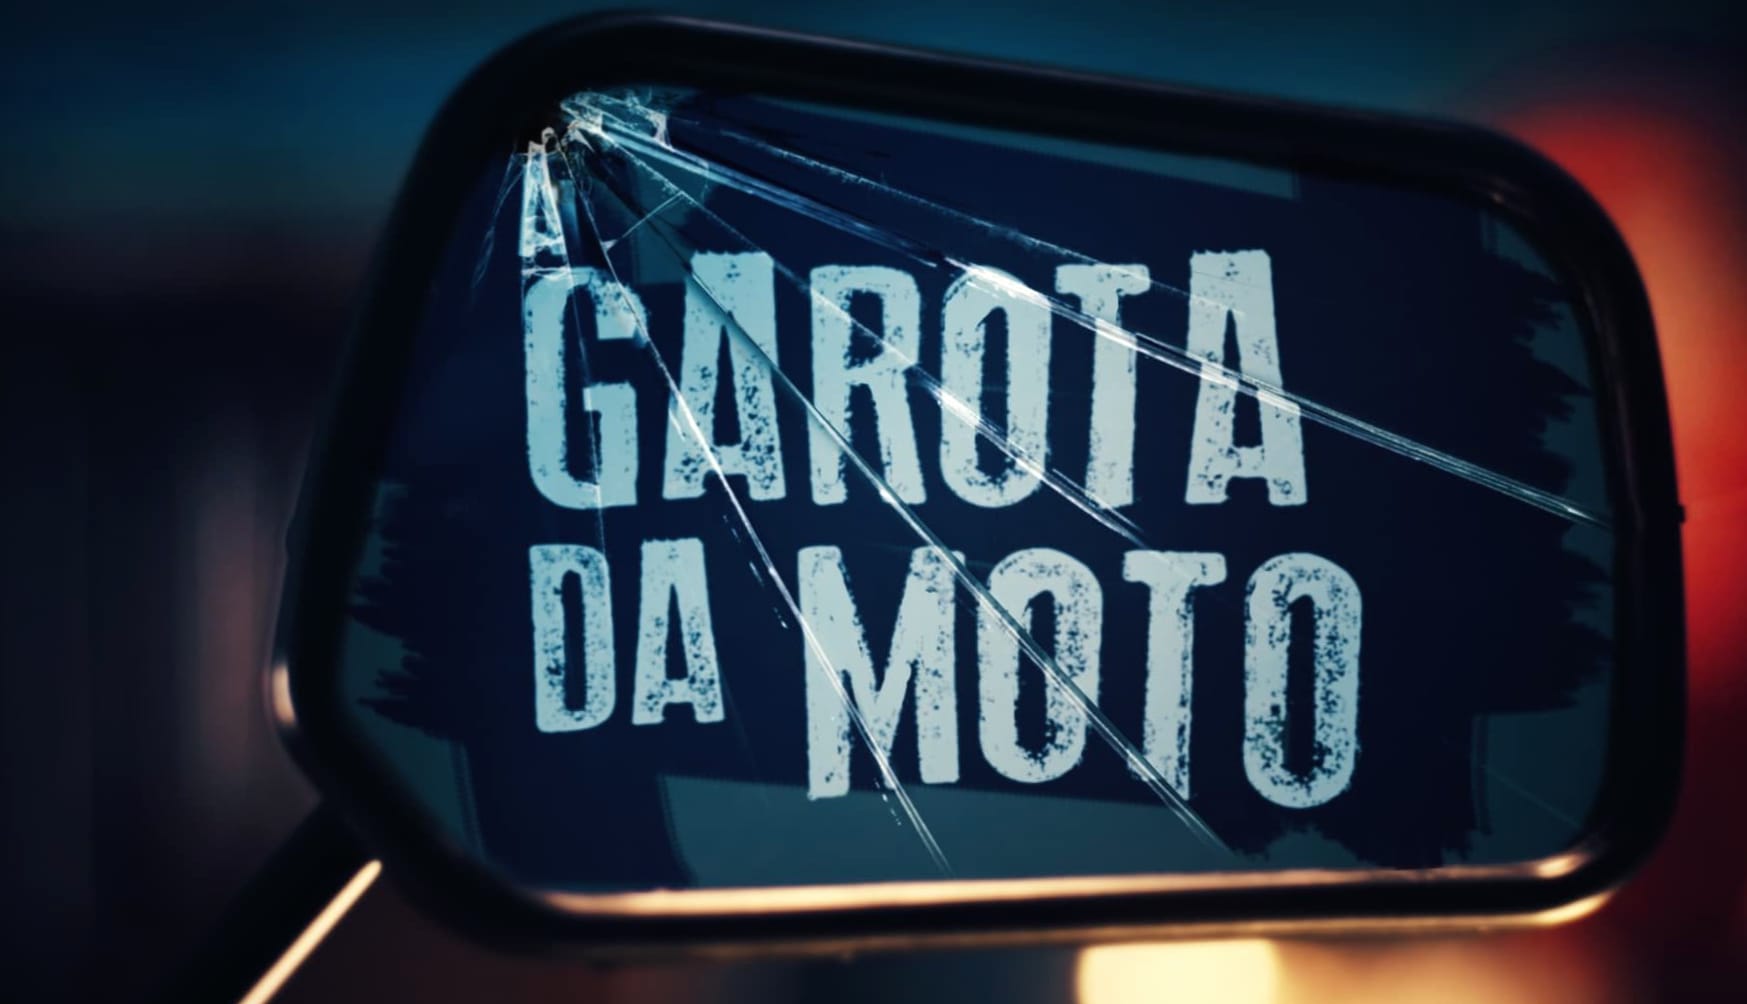 A Garota da Moto at 1024 x 768 size wallpapers HD quality